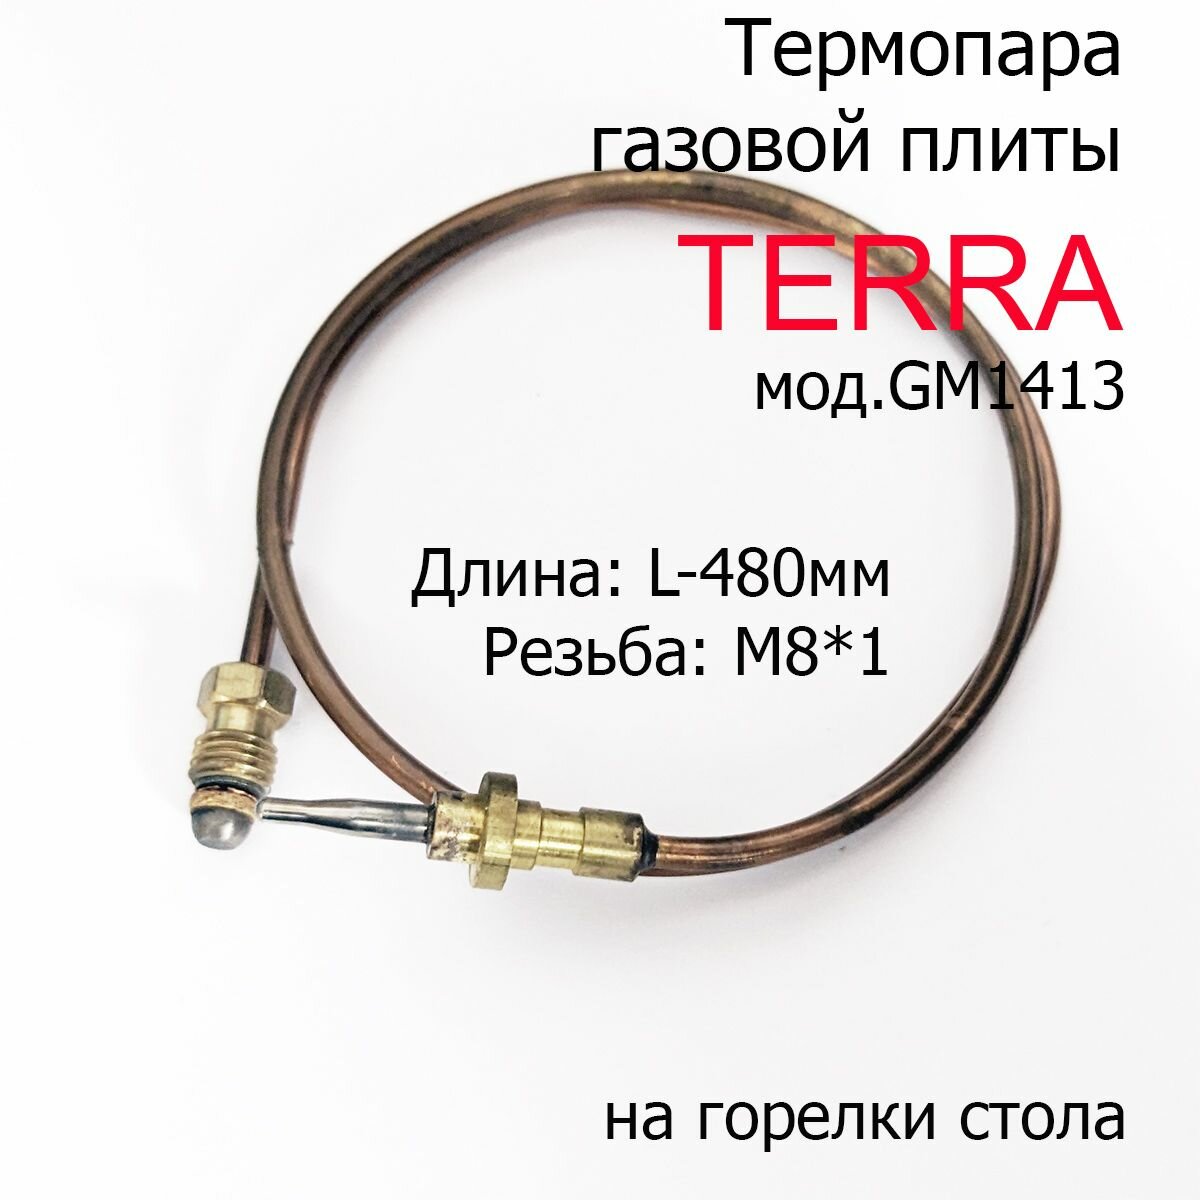 Термопара газовой плиты TERRA мод. GM1413 на горелки стола L-480мм, резьба М8*1